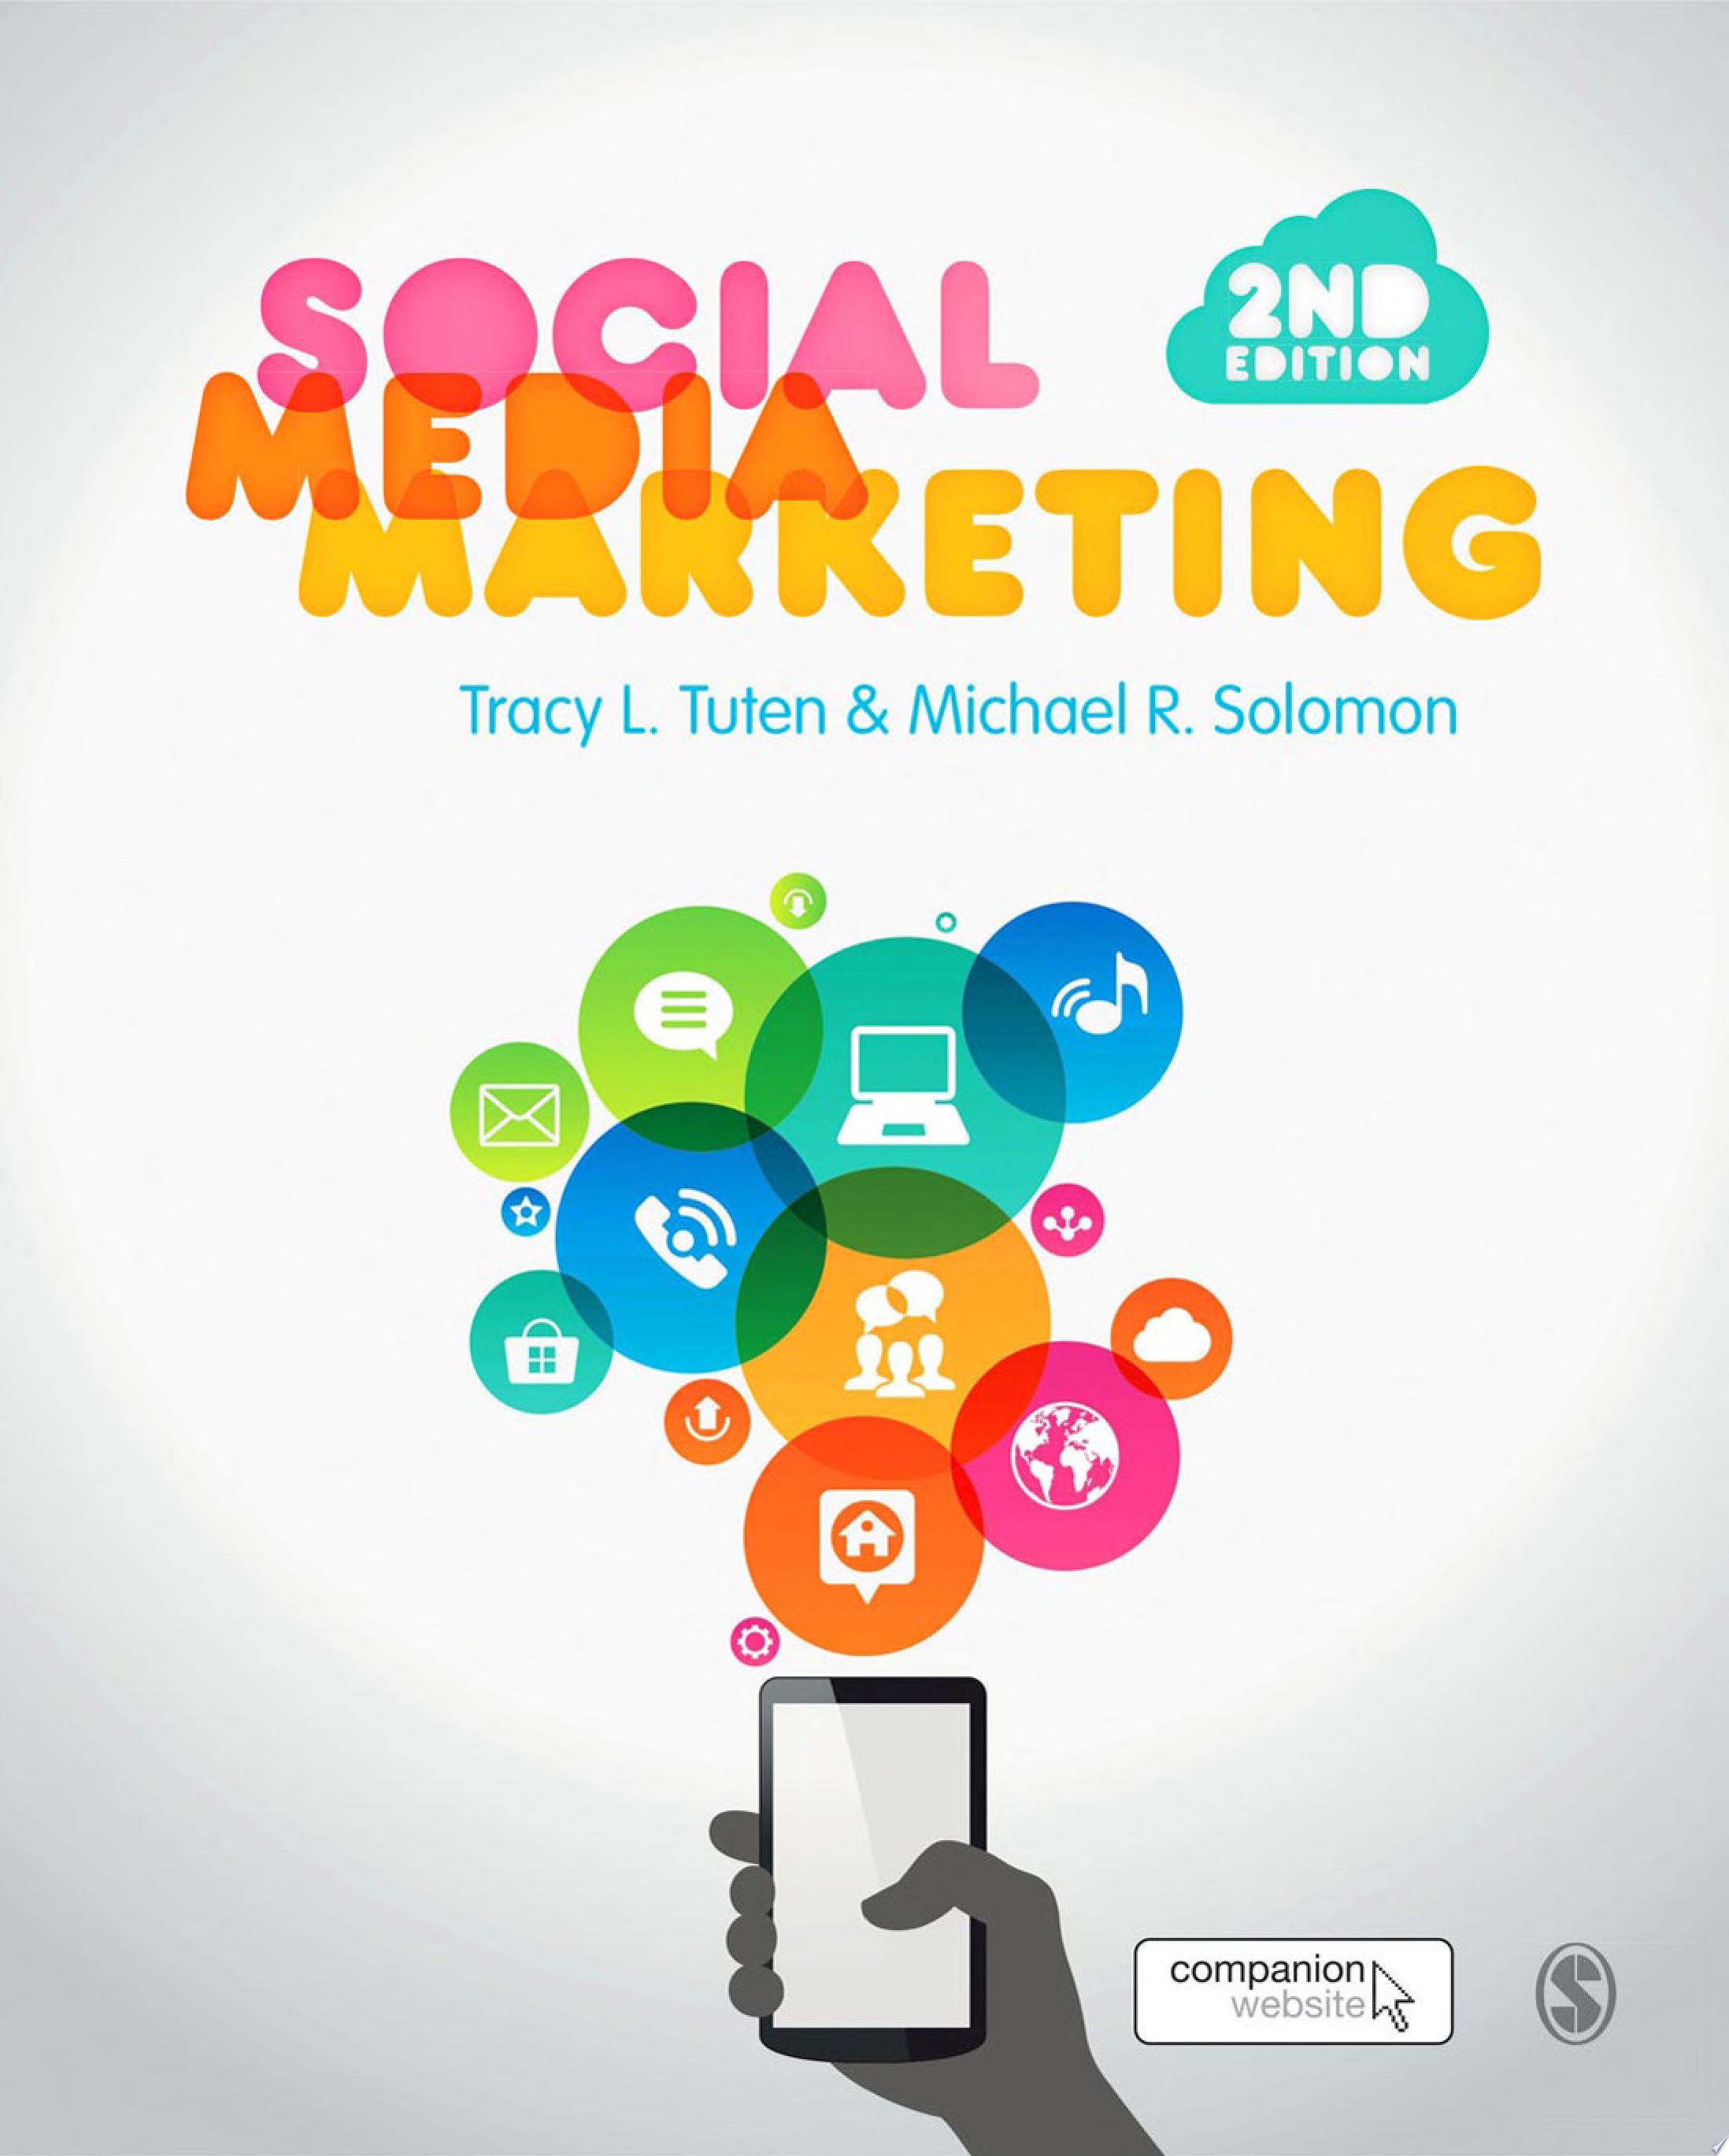 Image for "Social Media Marketing"